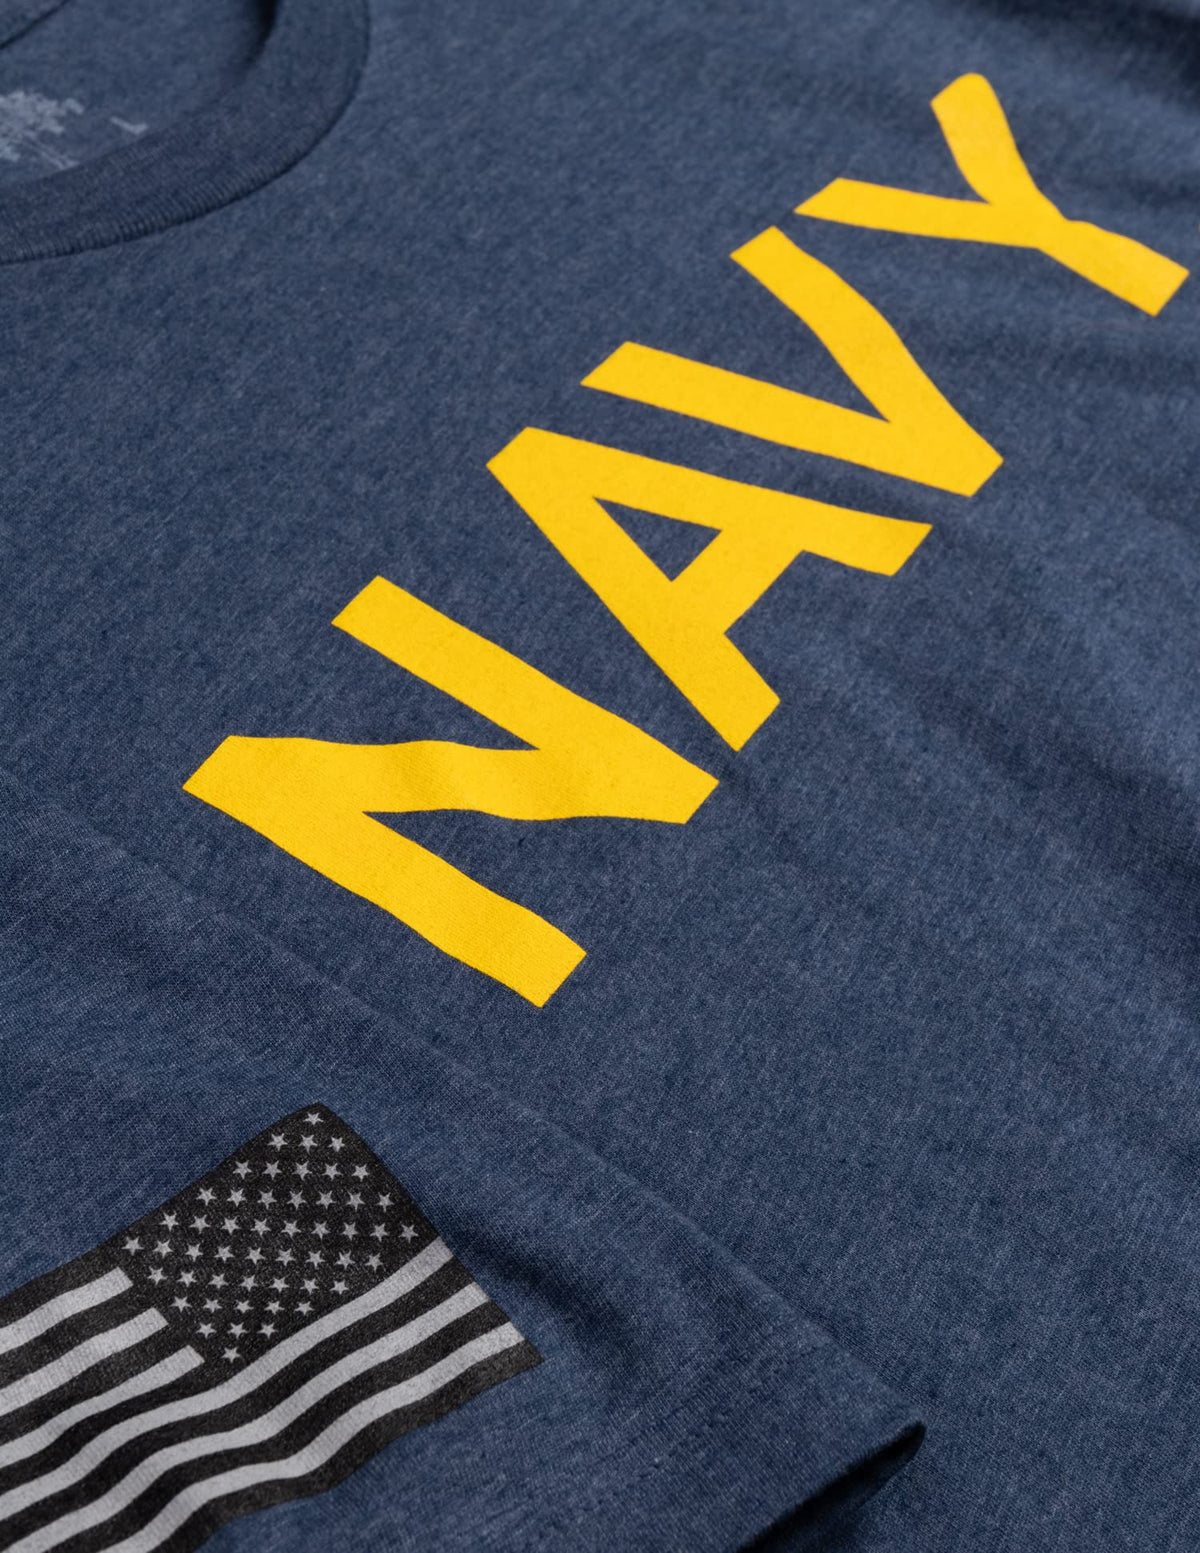 USS Blue Ridge, LCC-19 | U.S. Navy Sailor Veteran USN United States Naval T-shirt for Men Women